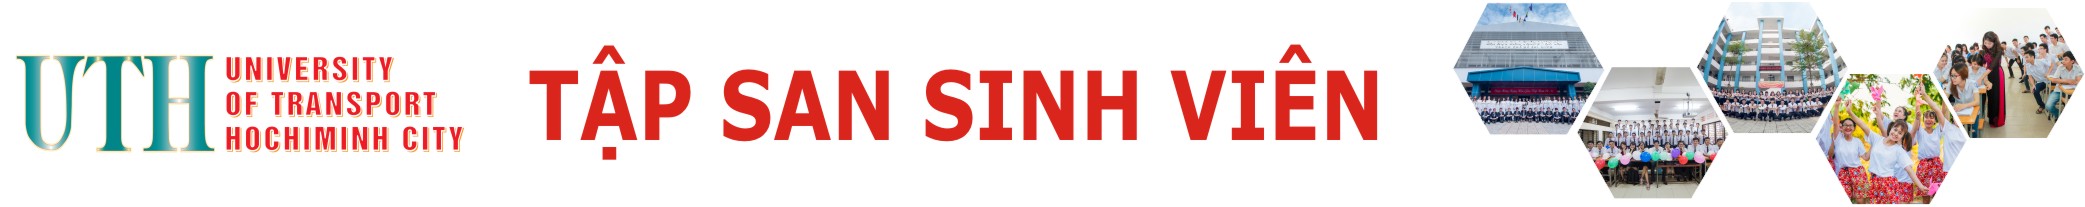 Tập san sinh viên Logo